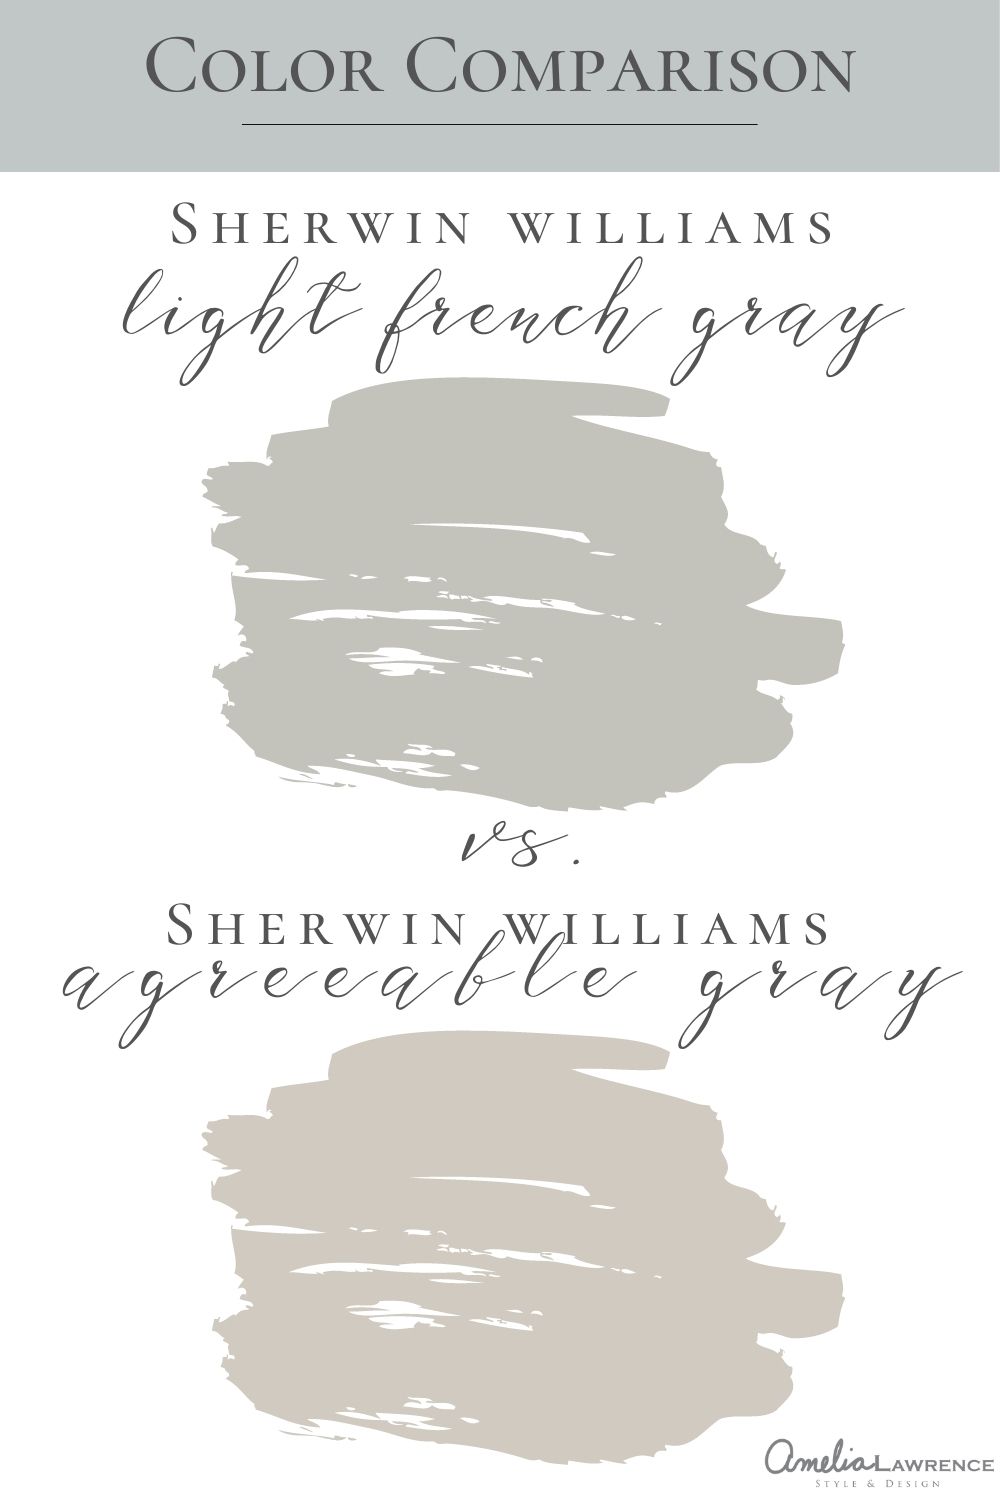 Sw light french gray